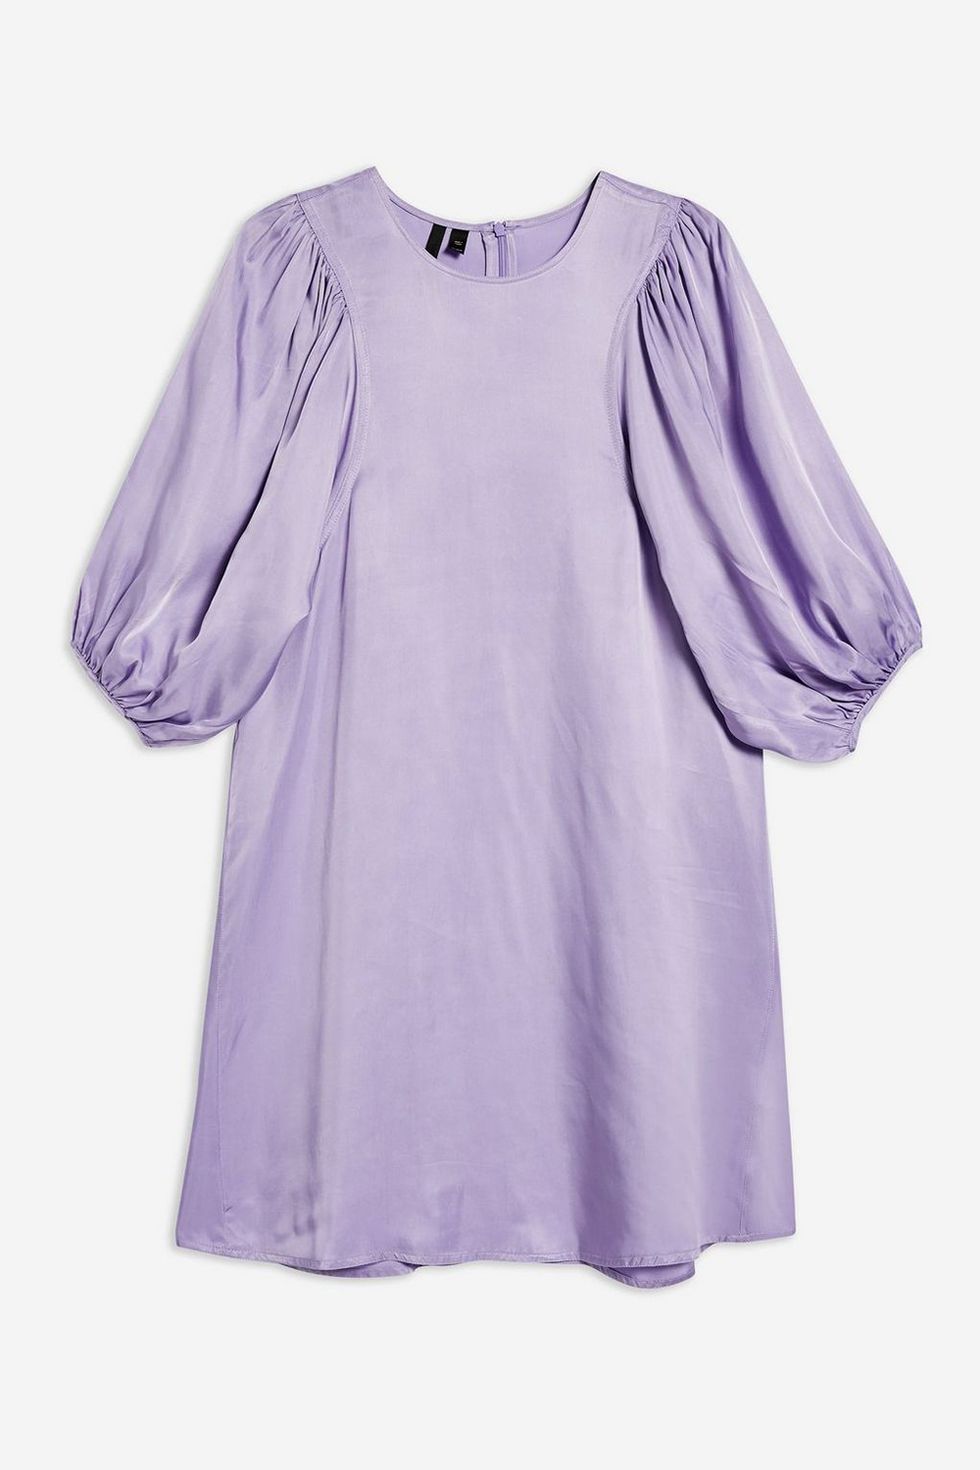 Clothing, Violet, Purple, Sleeve, Lavender, Lilac, T-shirt, Blouse, Shoulder, Top, 